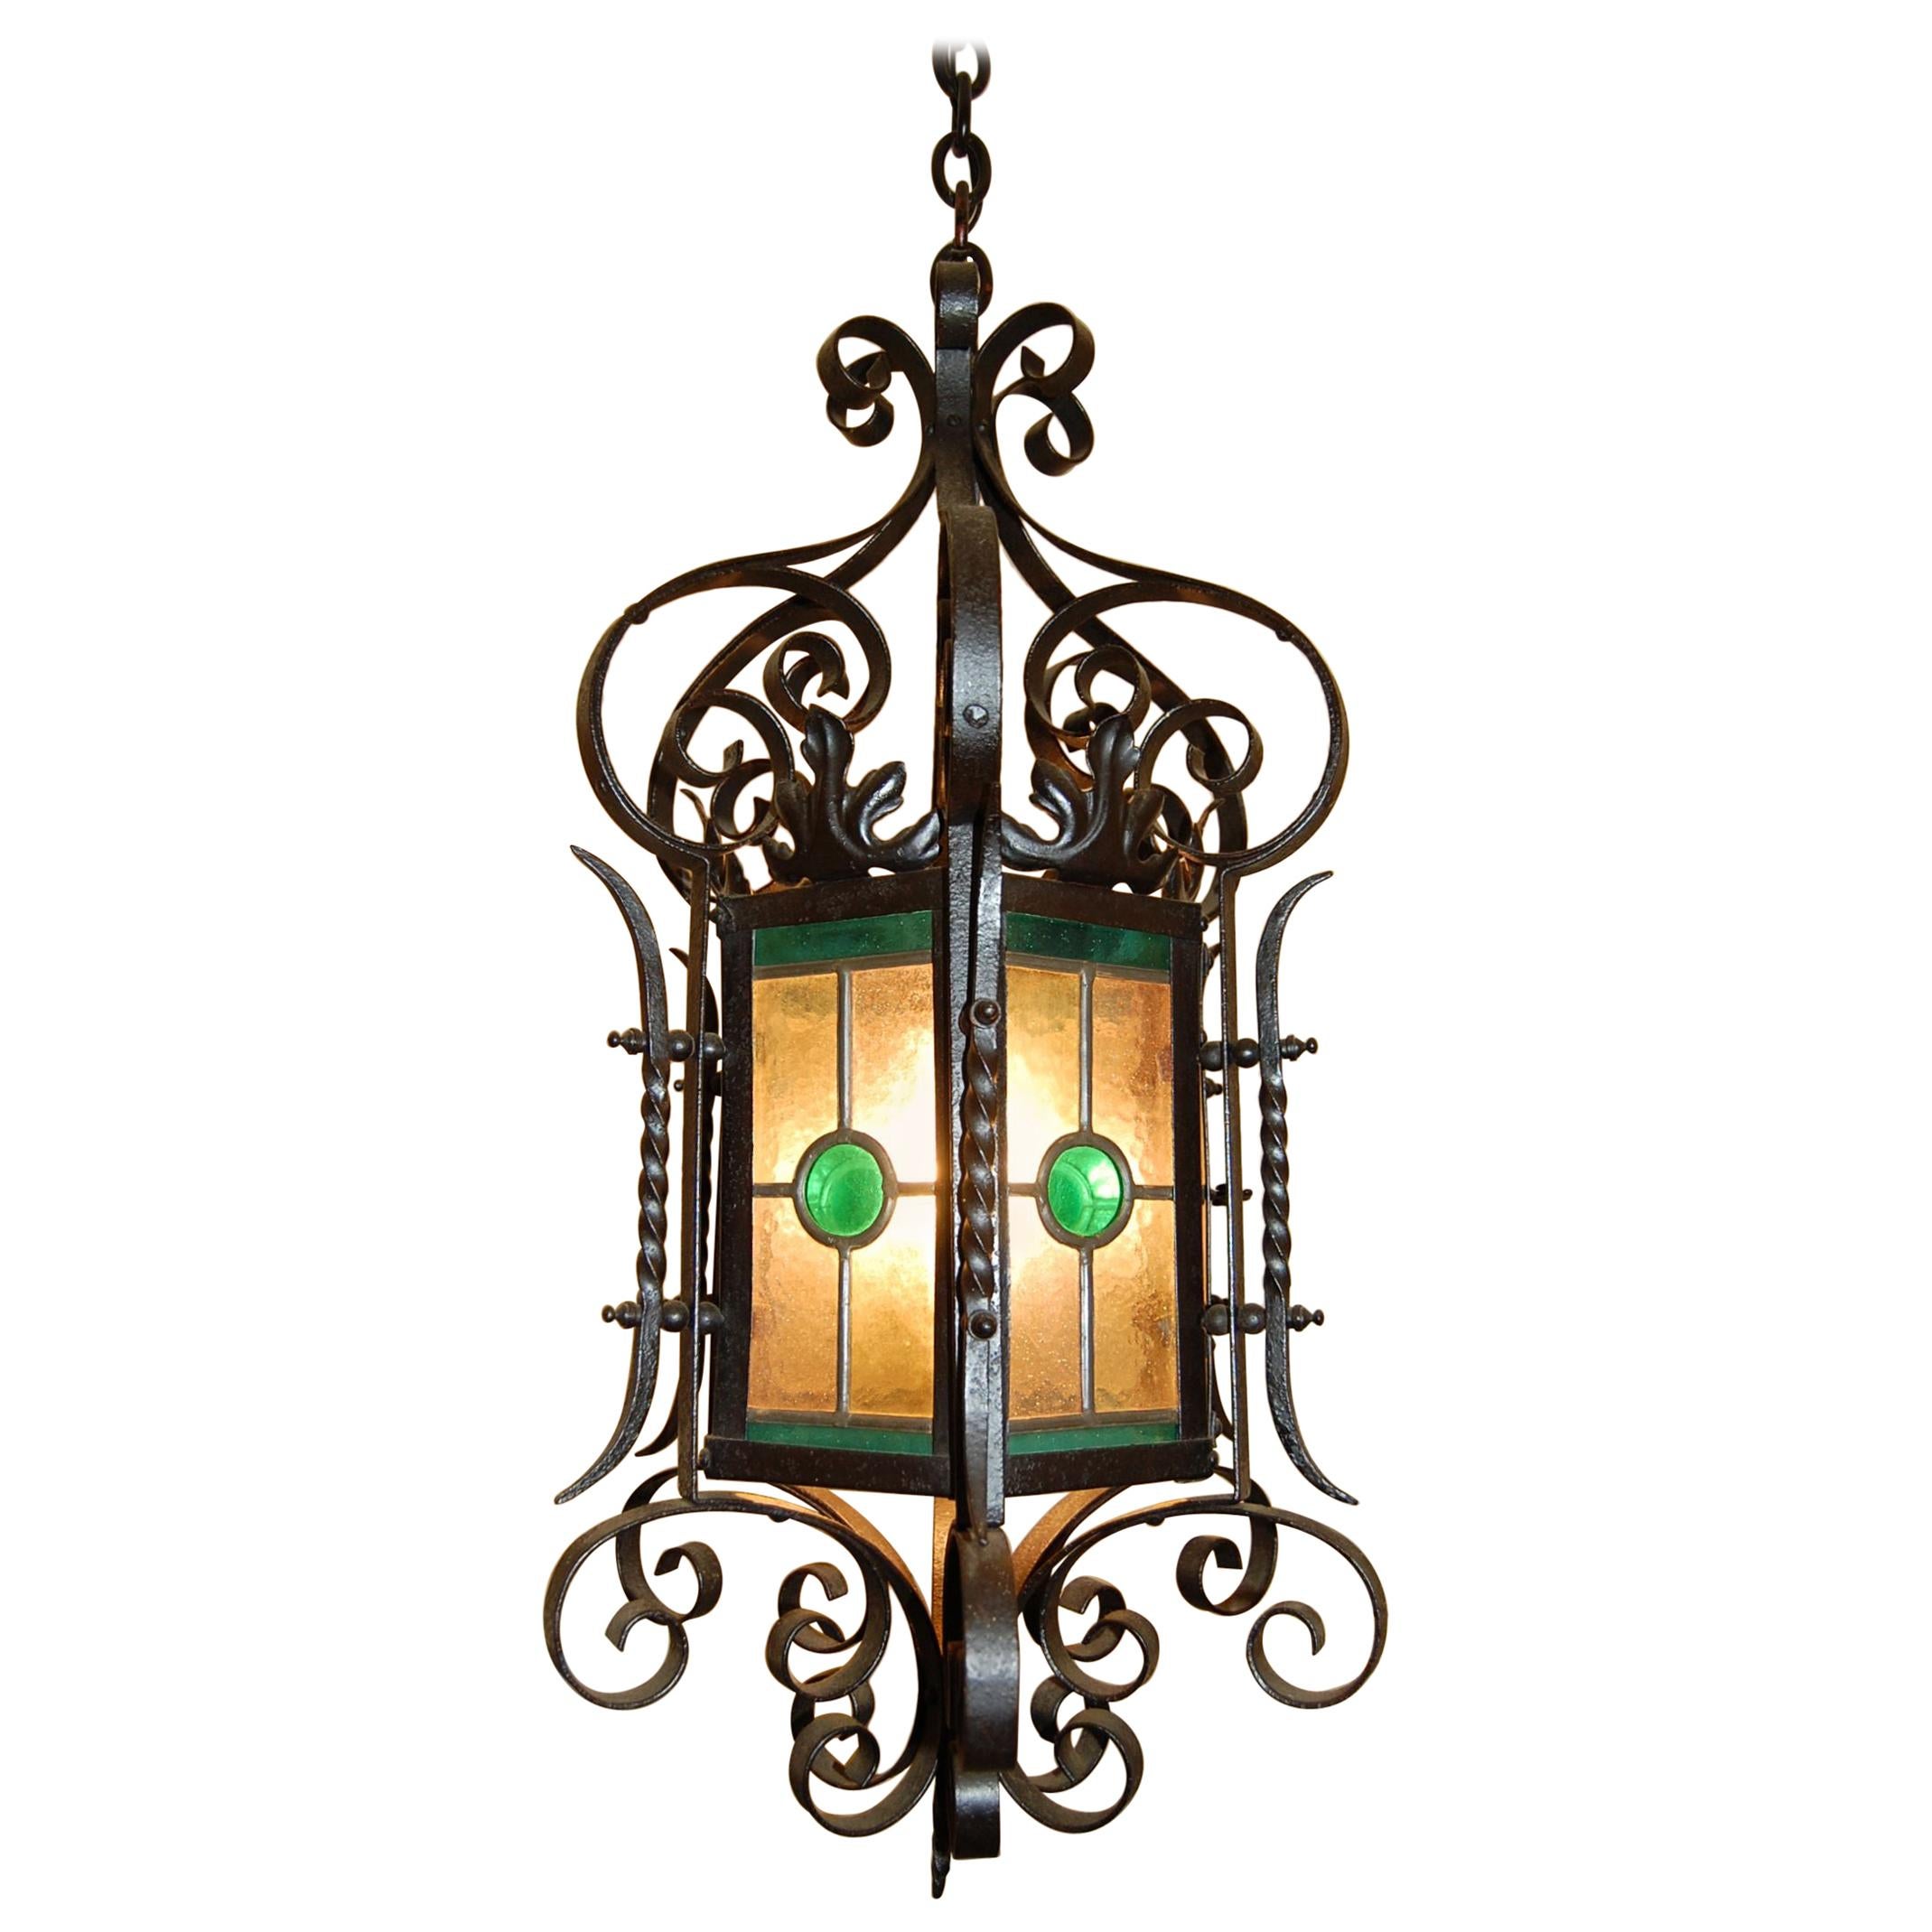 Ornate American 19th Century Iron & Tole Hanging Lantern, Colored Glass Panels